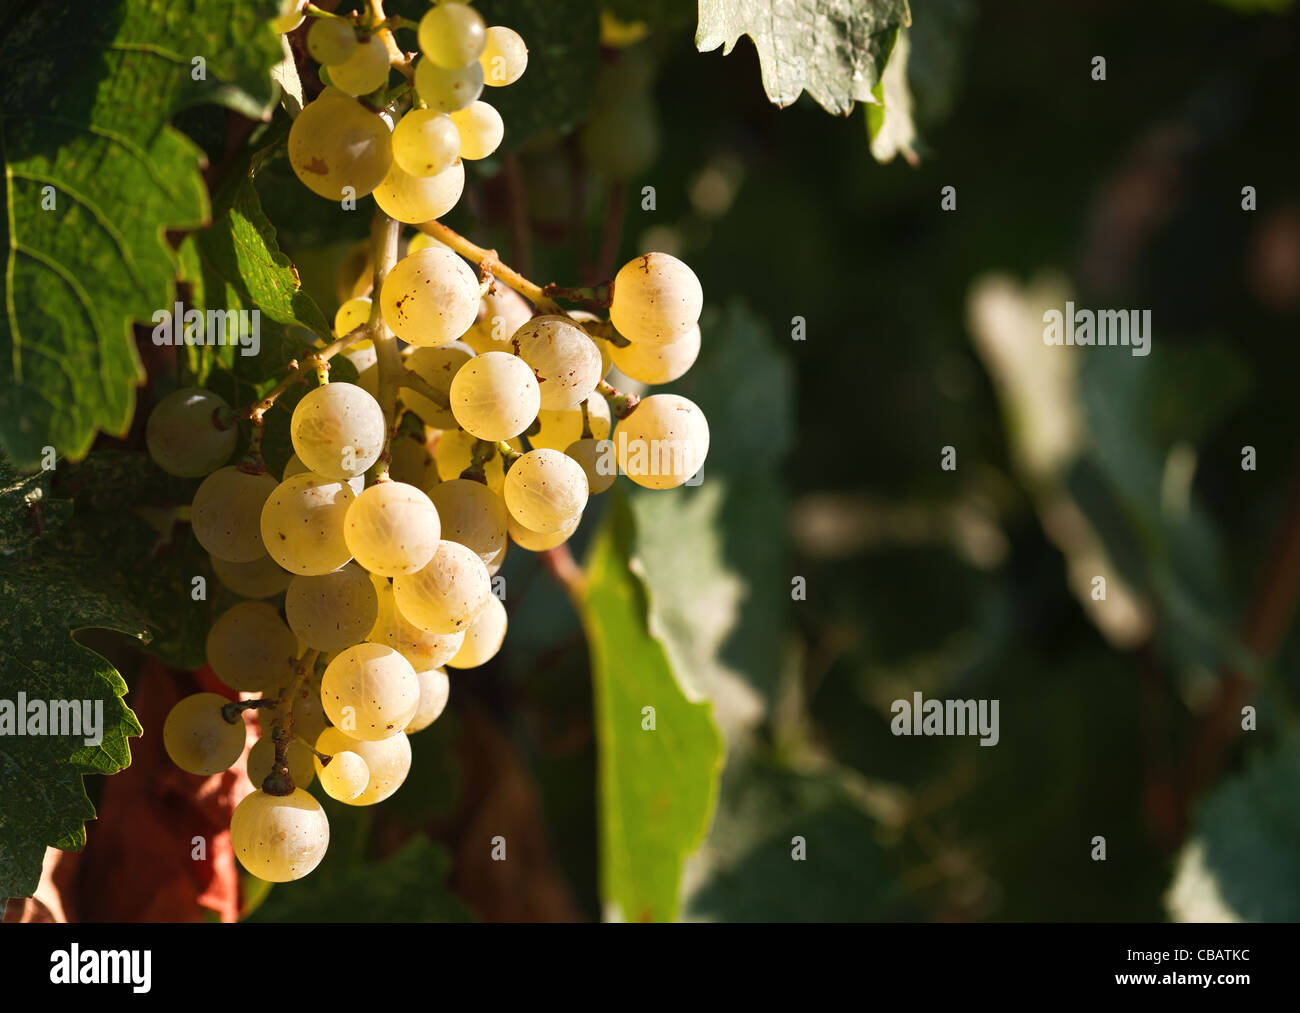 fresh fruits of grapes growing on bush Stock Photo